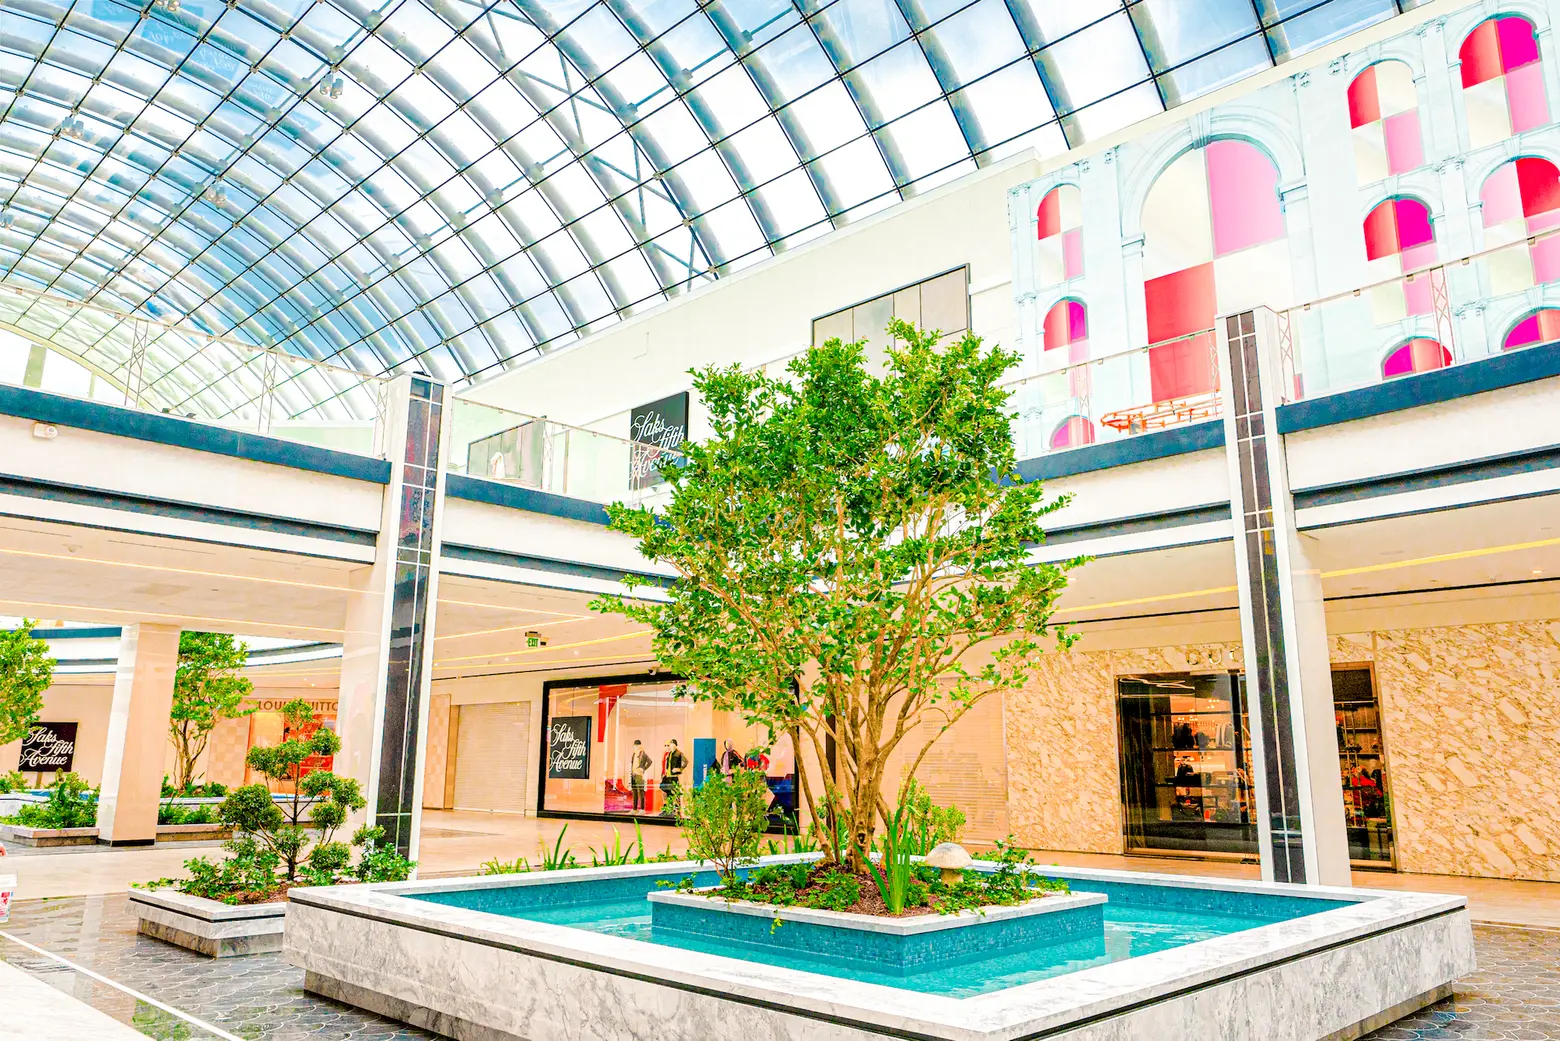 New Jersey mall adding luxury apartments